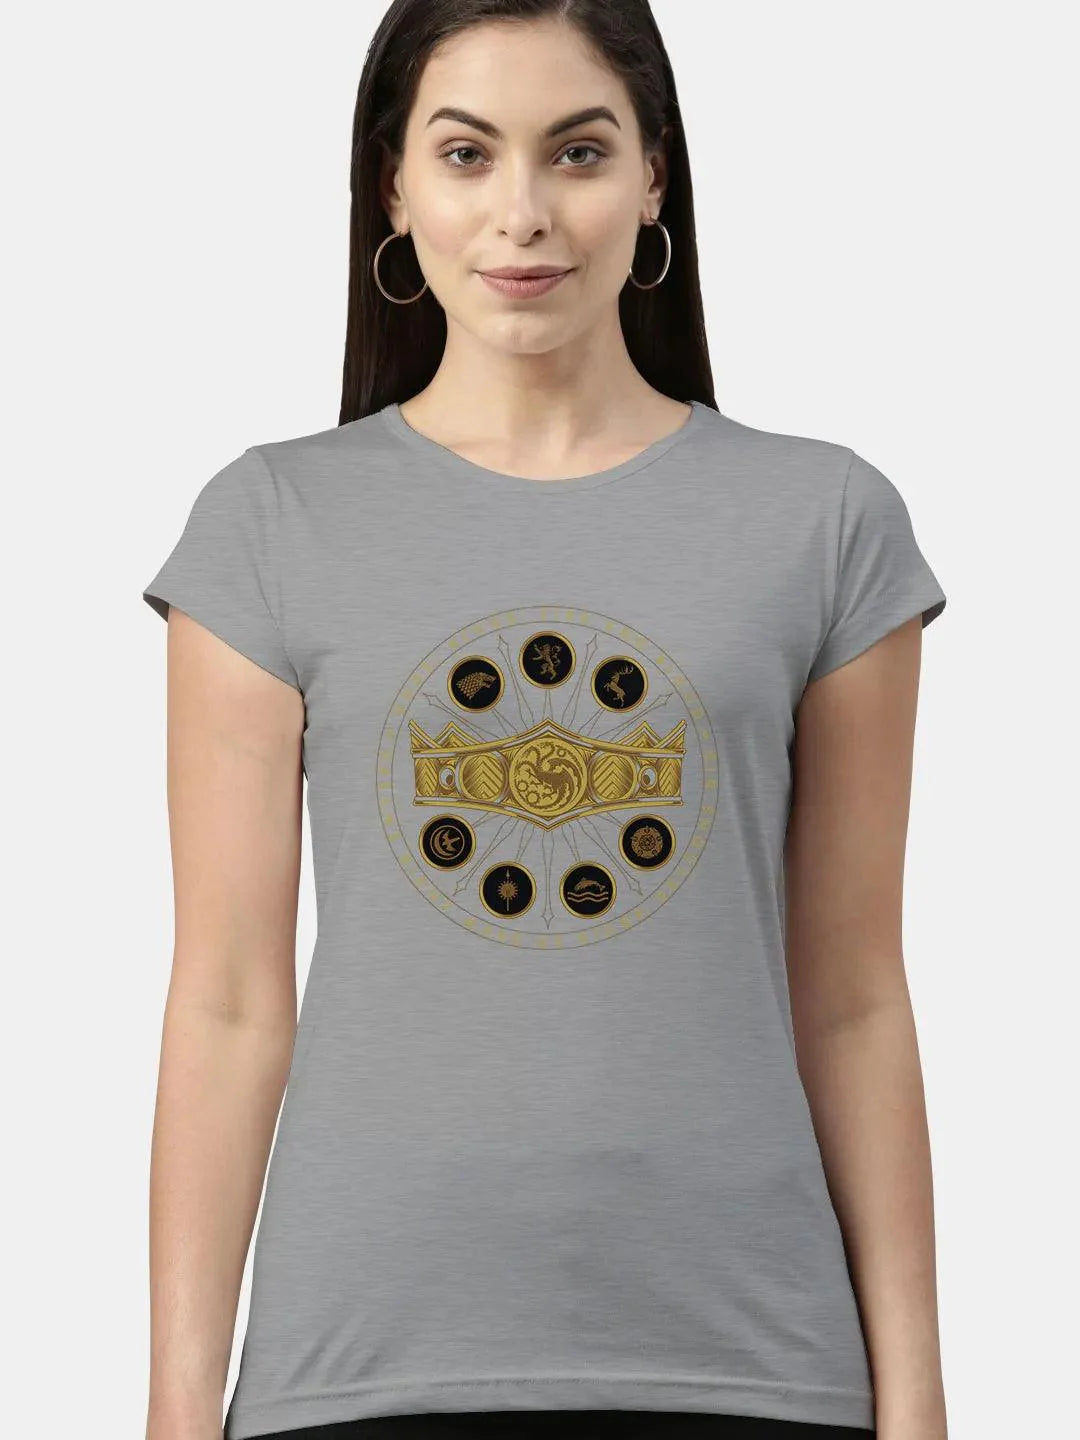 allbrand365 designer Ideology Womens Plus Size Thumbholes T-Shirt,Grey,1X